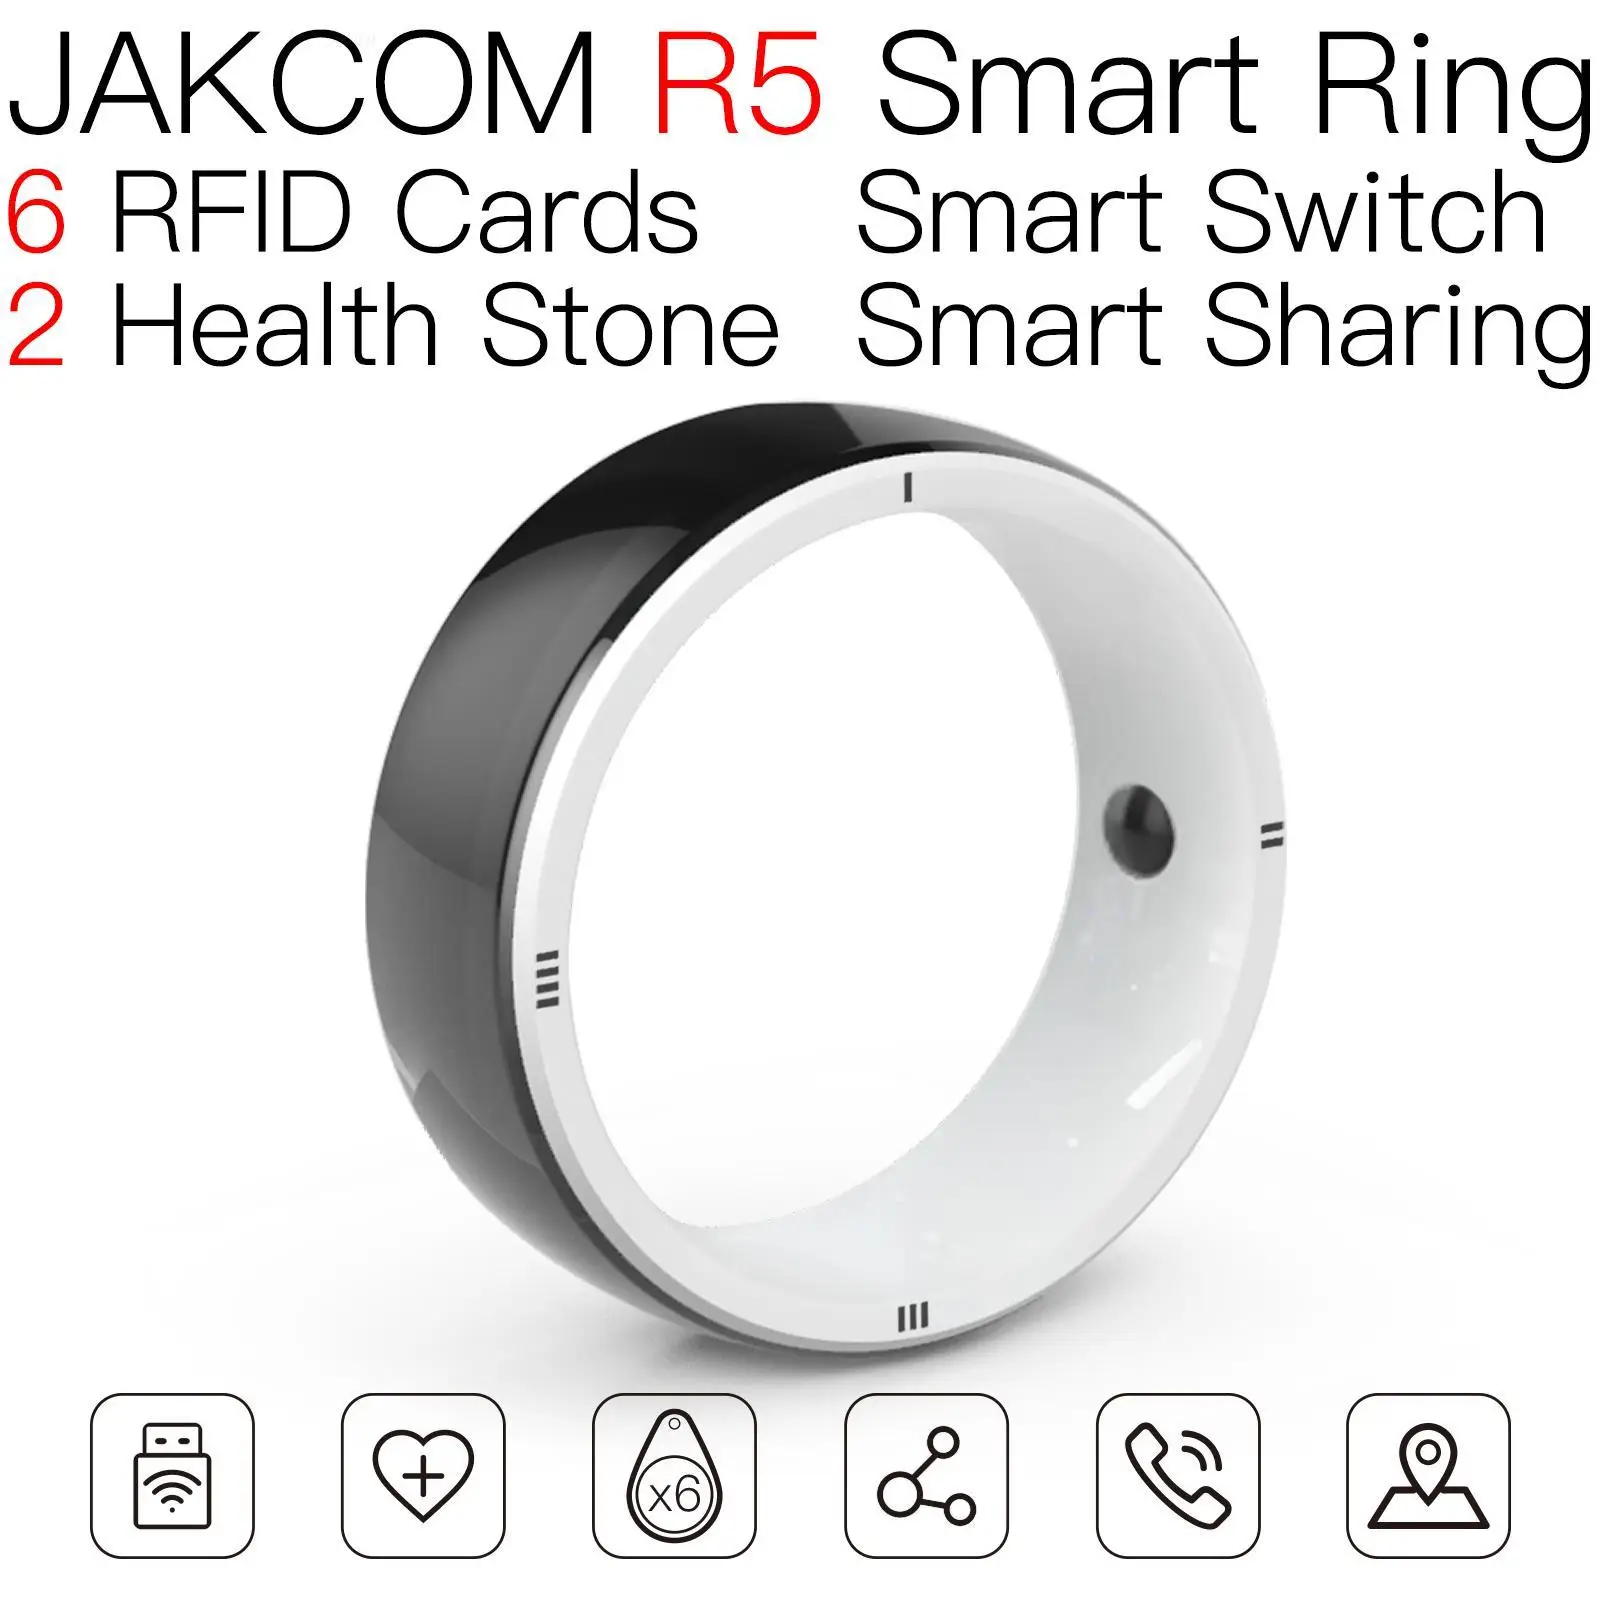 

JAKCOM R5 Smart Ring Super value as n tag pt160 owon battery tm card key uid changeable clone warehouse in europe rfid fudan